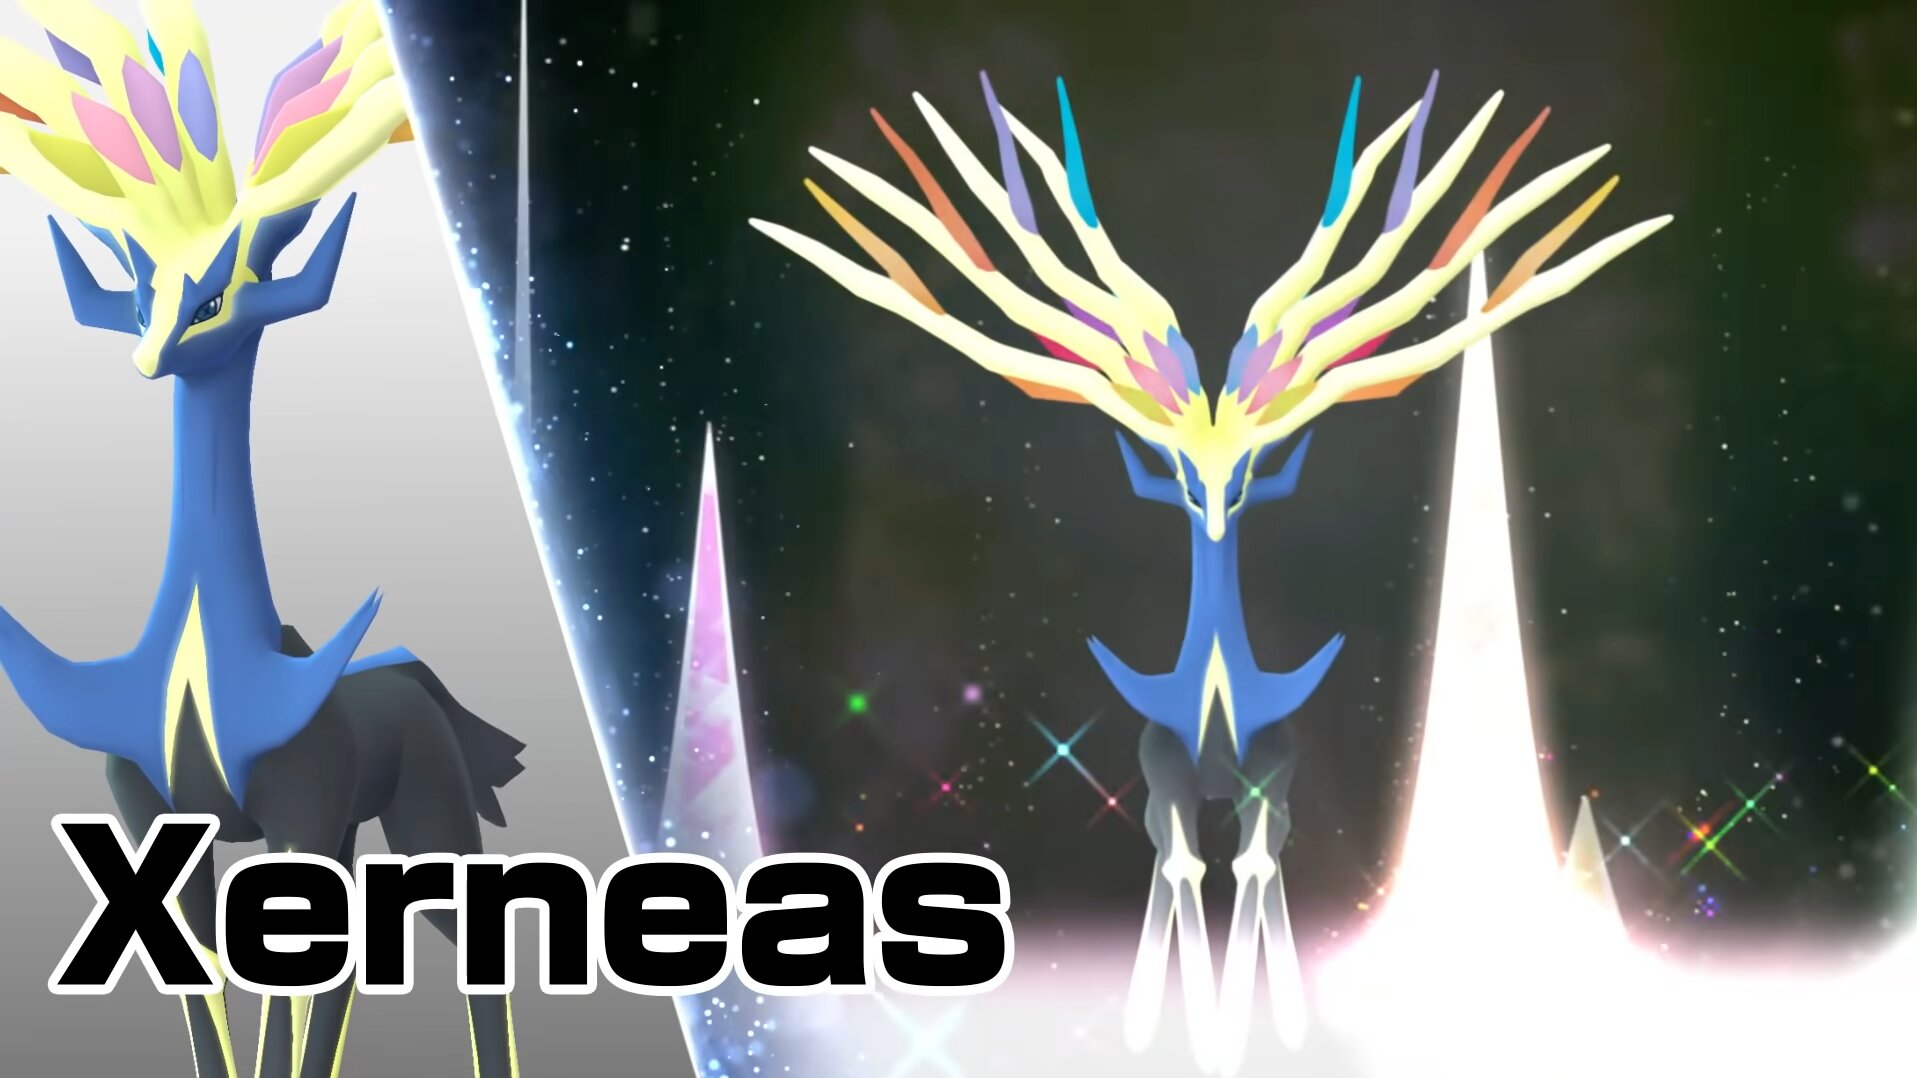 Xerneas is one of the best fairy type pokémon in Pokémon Go